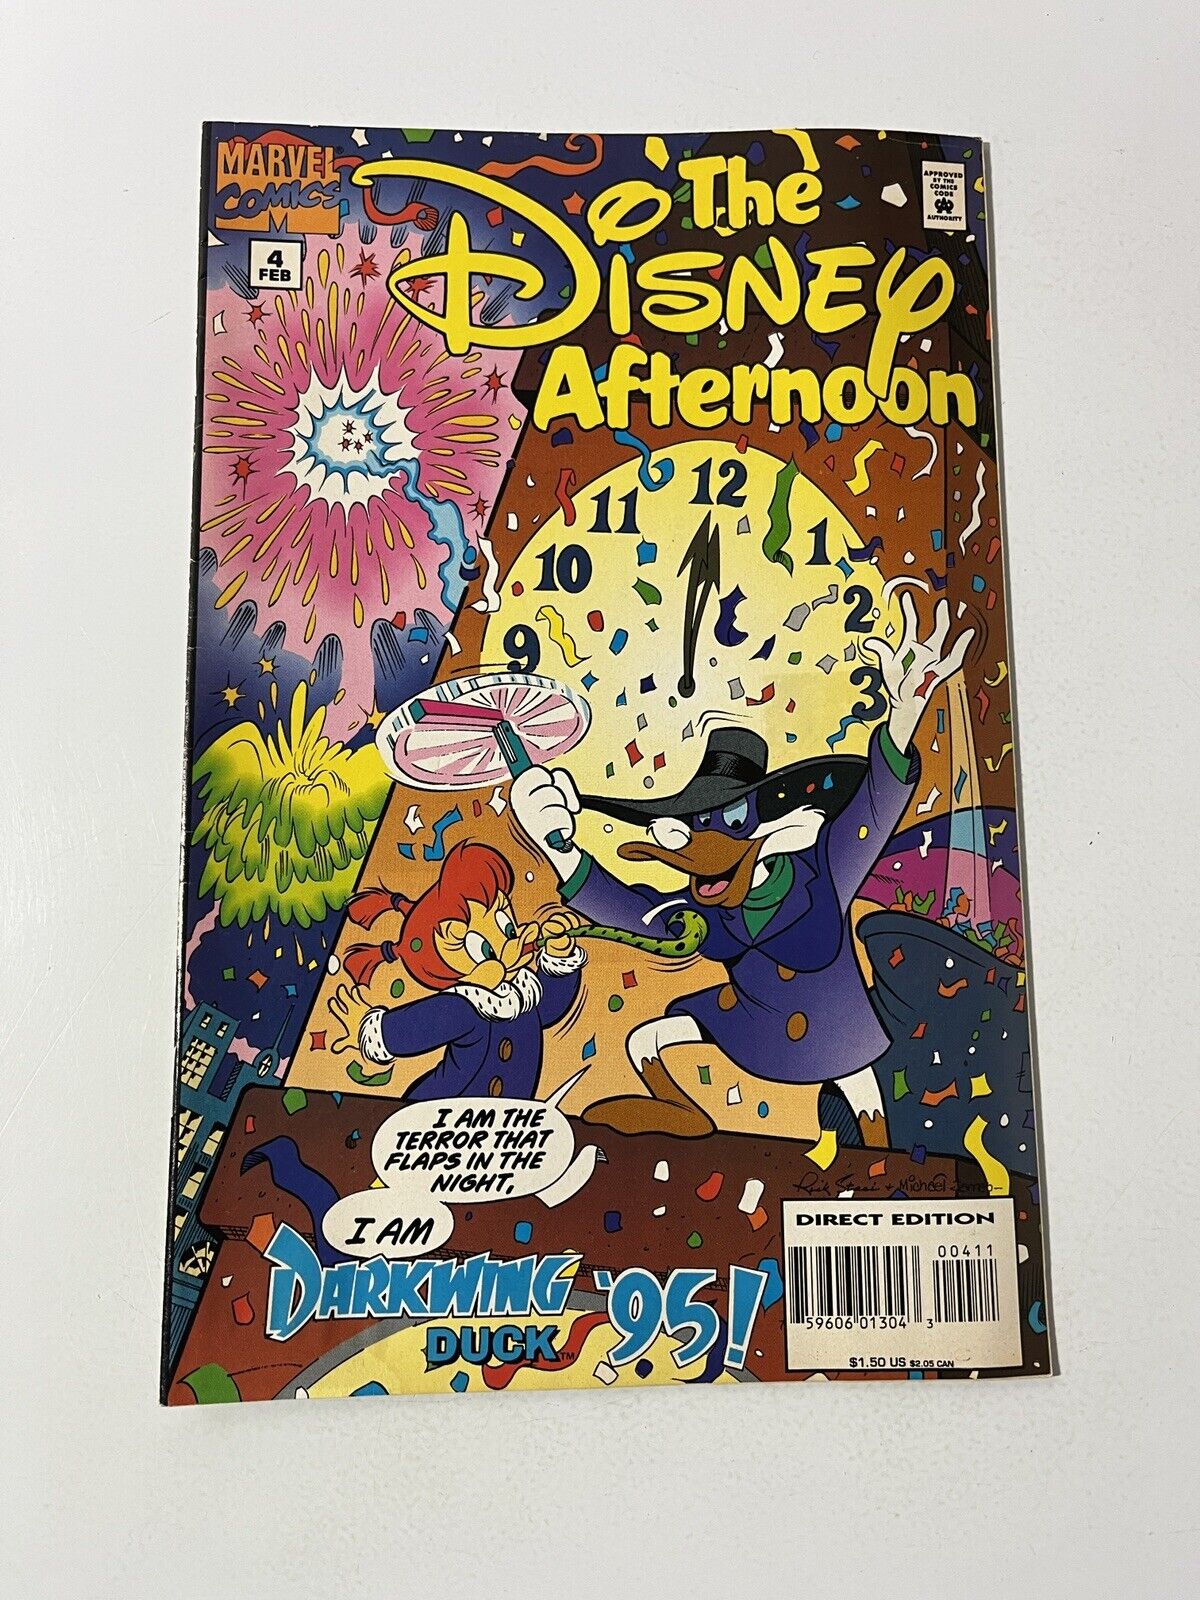 Disney Afternoon featuring Darkwing Duck #4 Marvel Comics 1994